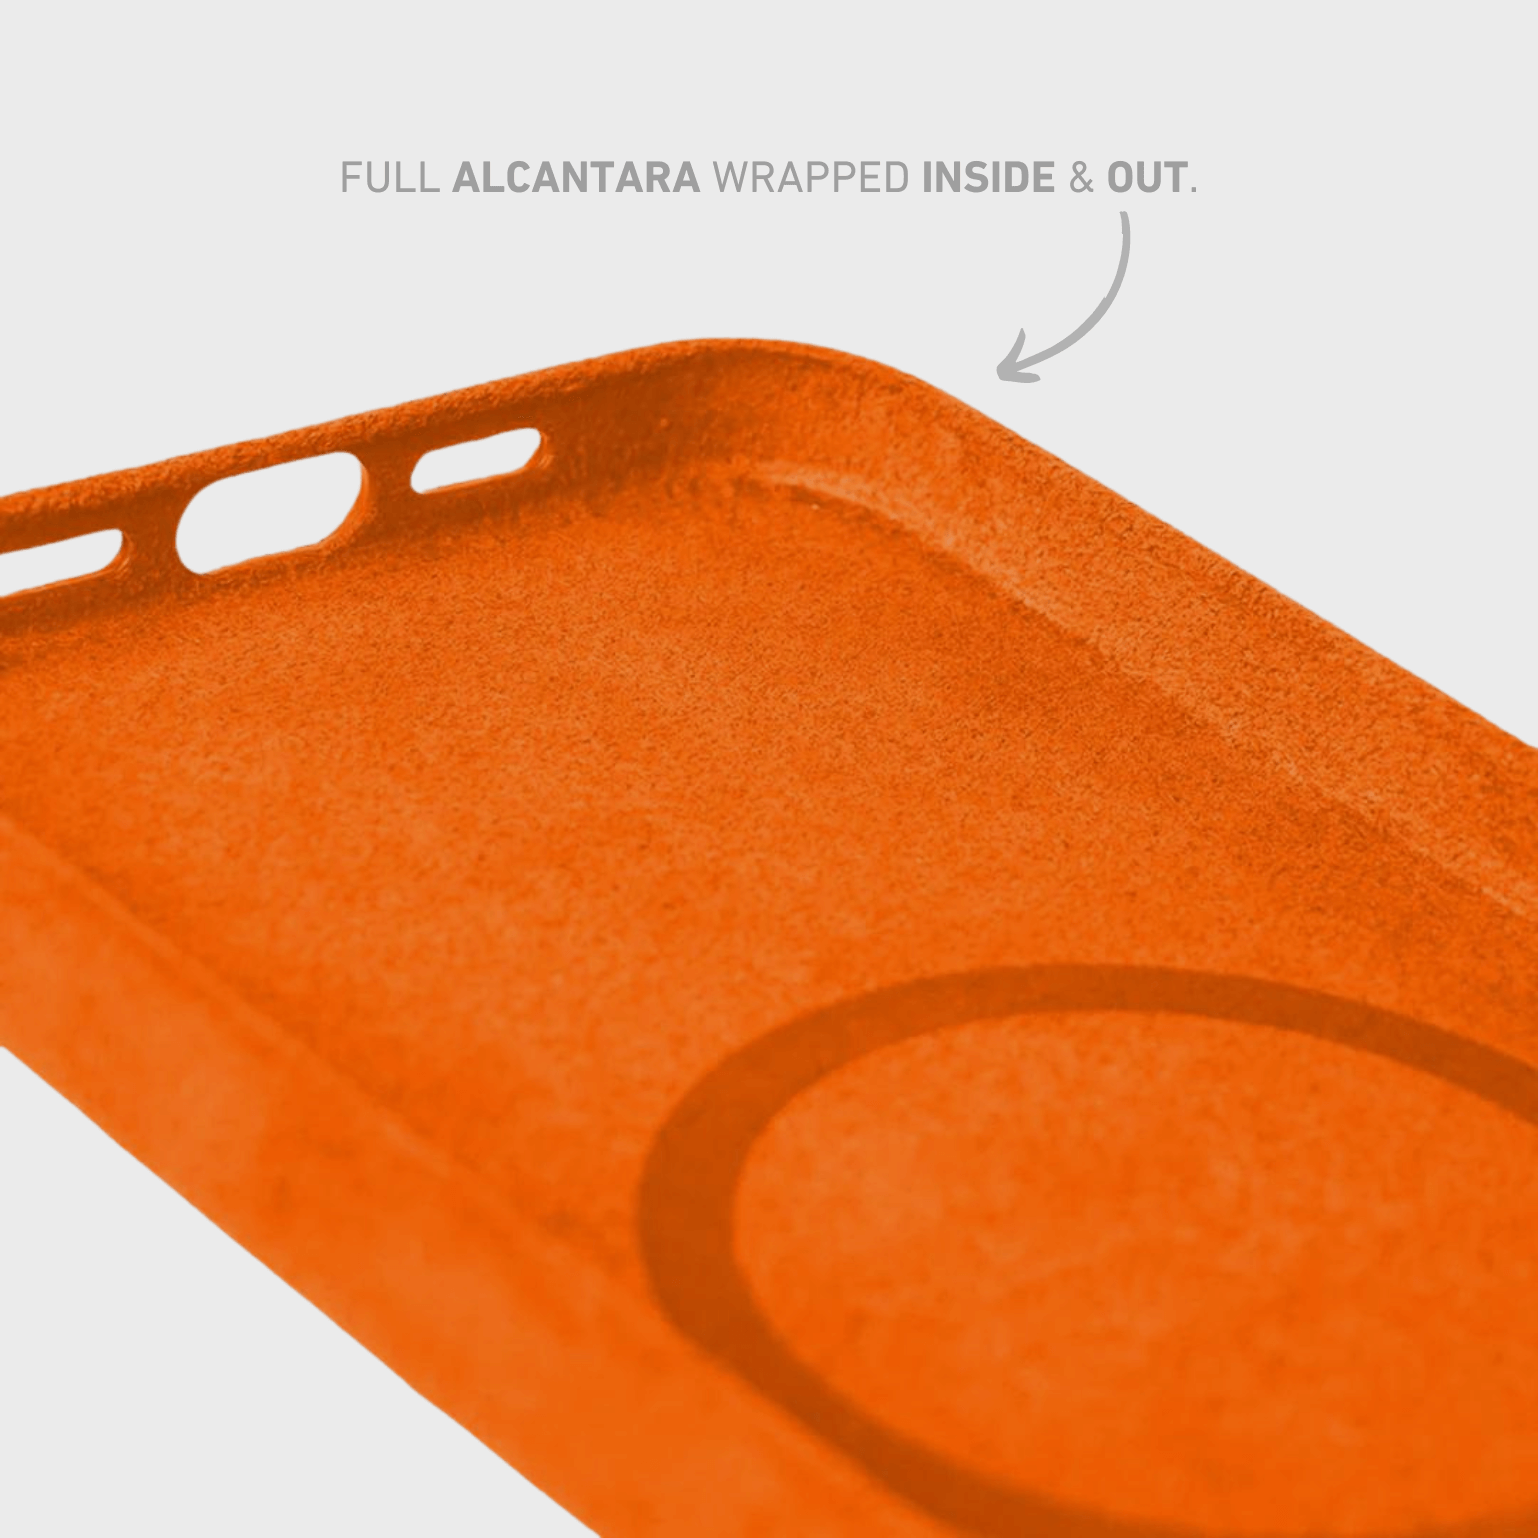 Alcantara Case - Orange Edition